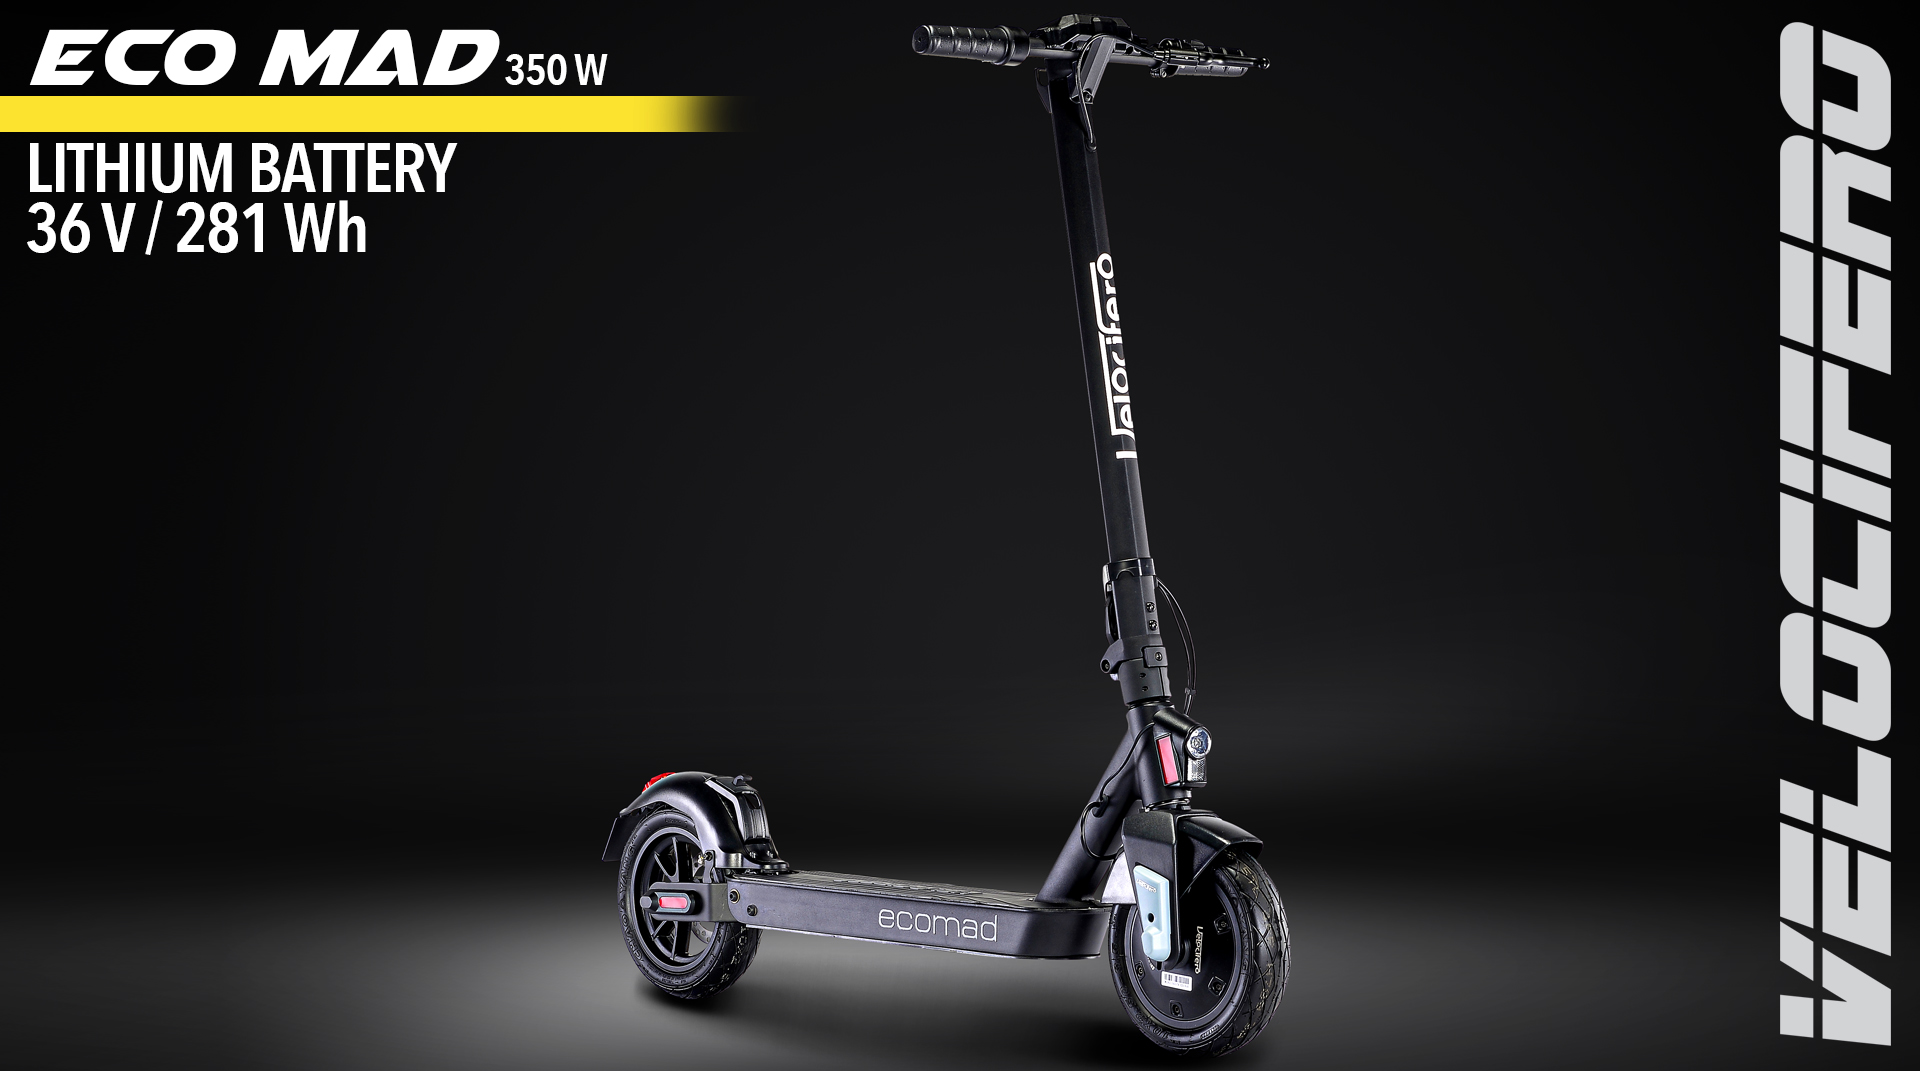 Eco Mad 350w electric kick scooter velocifero emobility alessandro tartarini designer